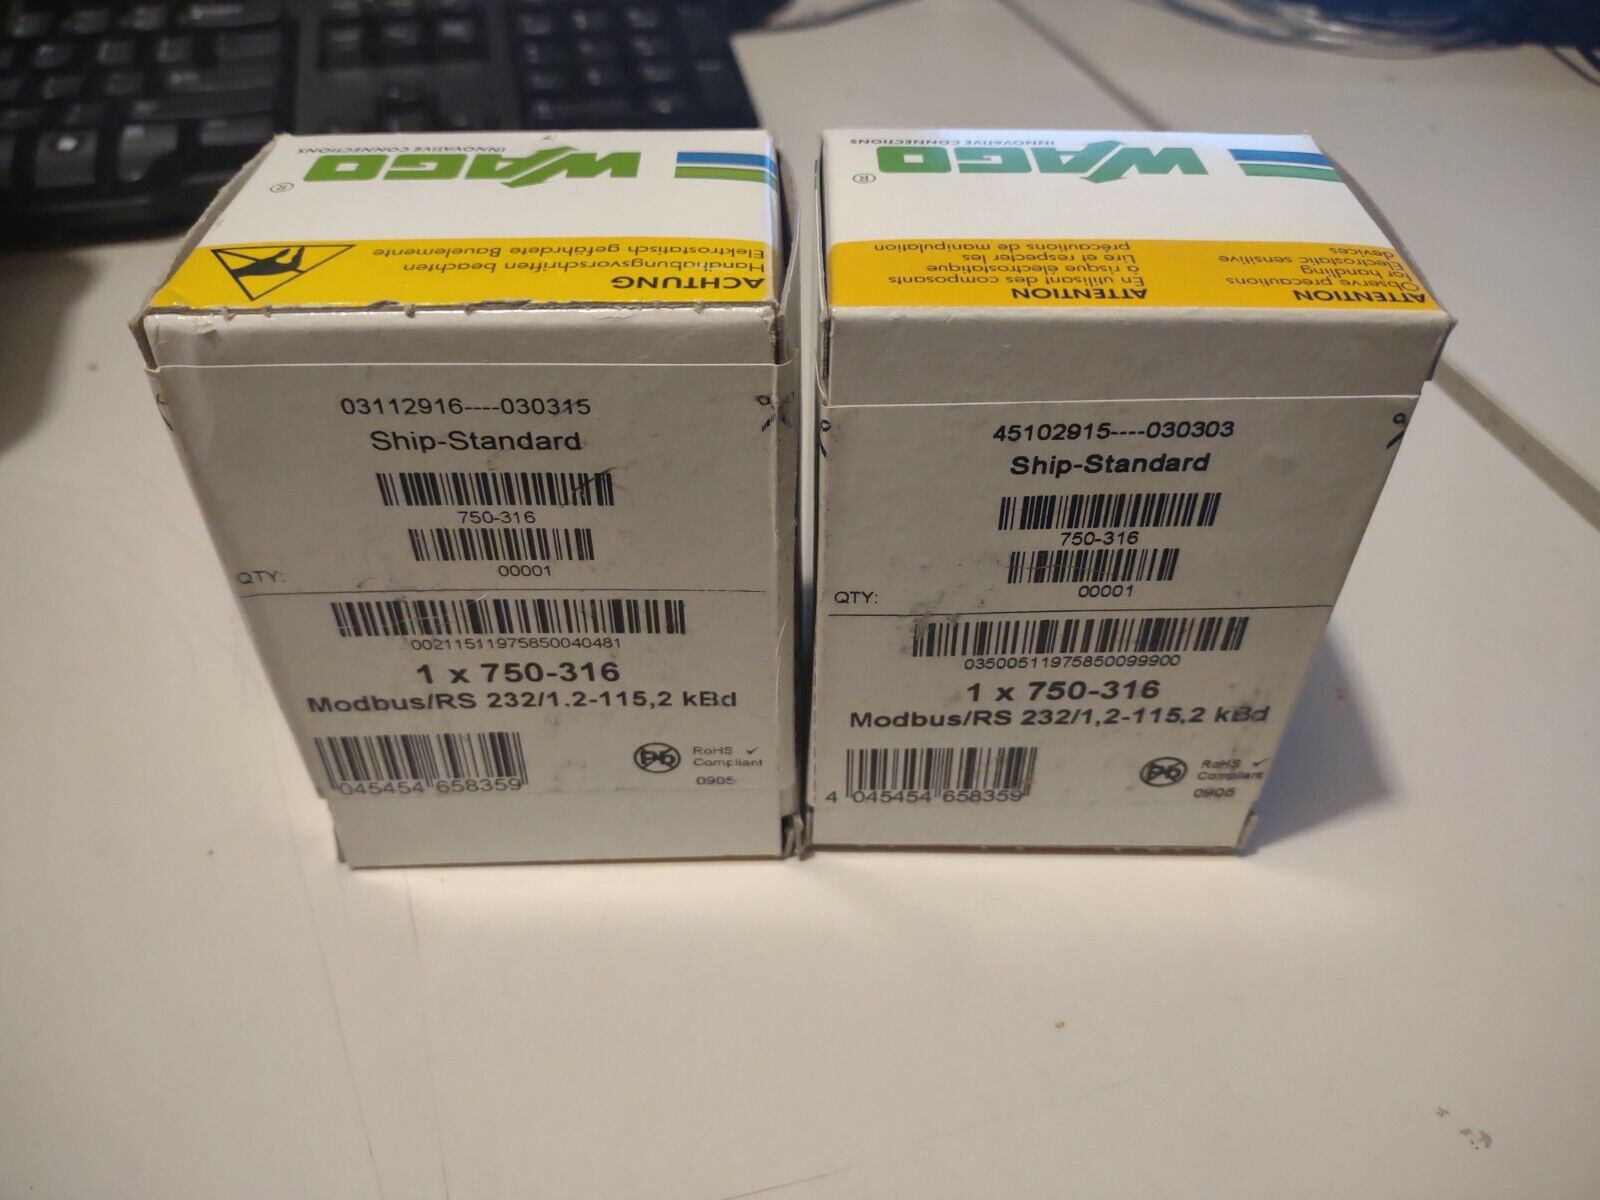 Brand New Wago 750-316 Modbus/RS 232/1,2-115,2 kBd (2pcs) unopened boxes